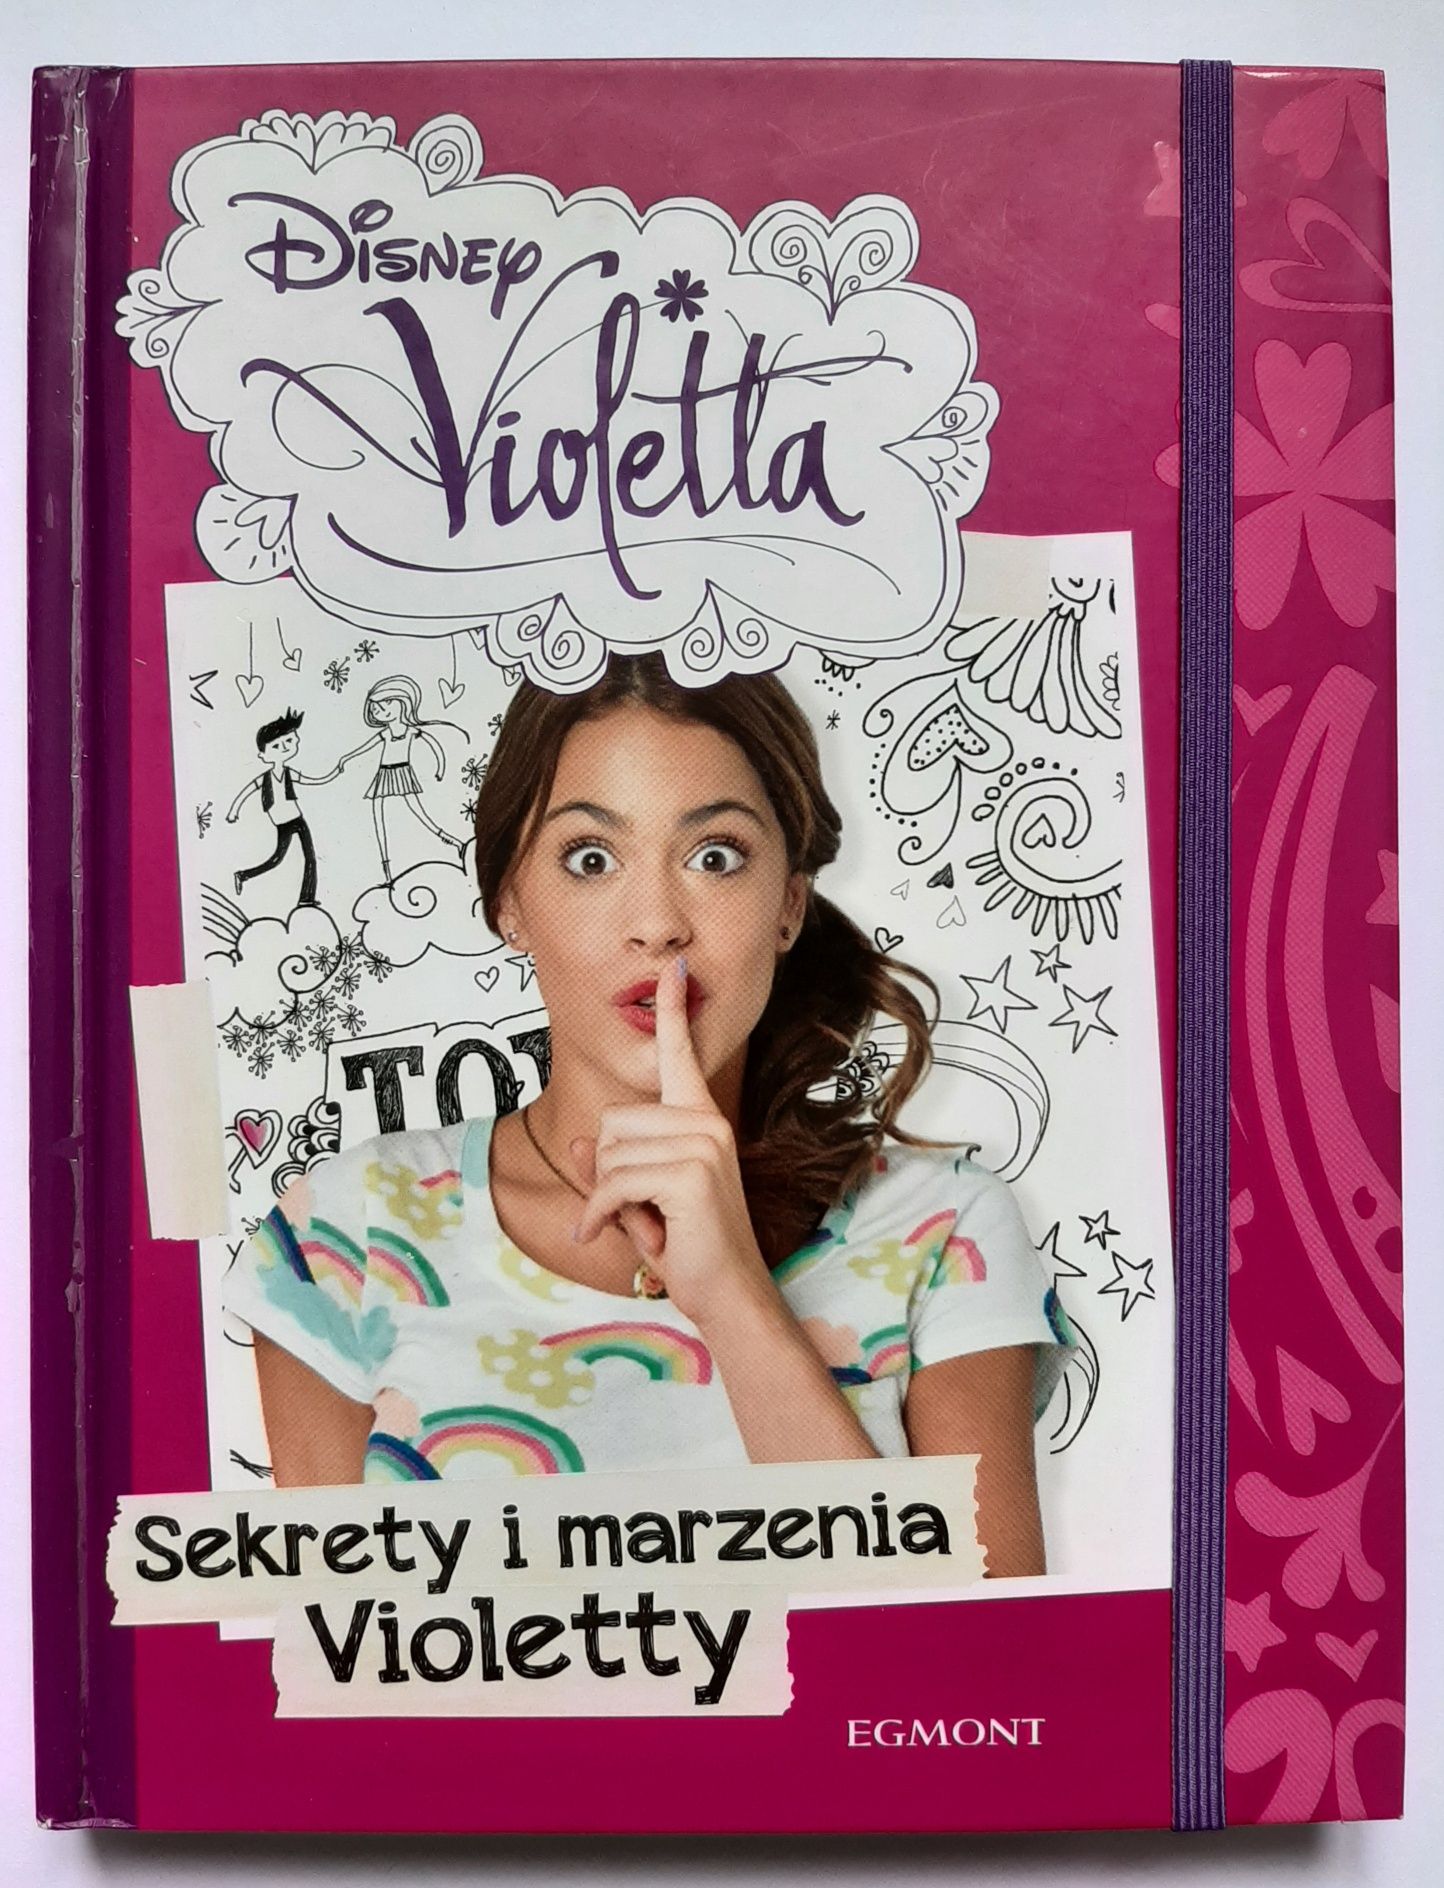 "Sekrety i marzenia Violetty" 3 tomy